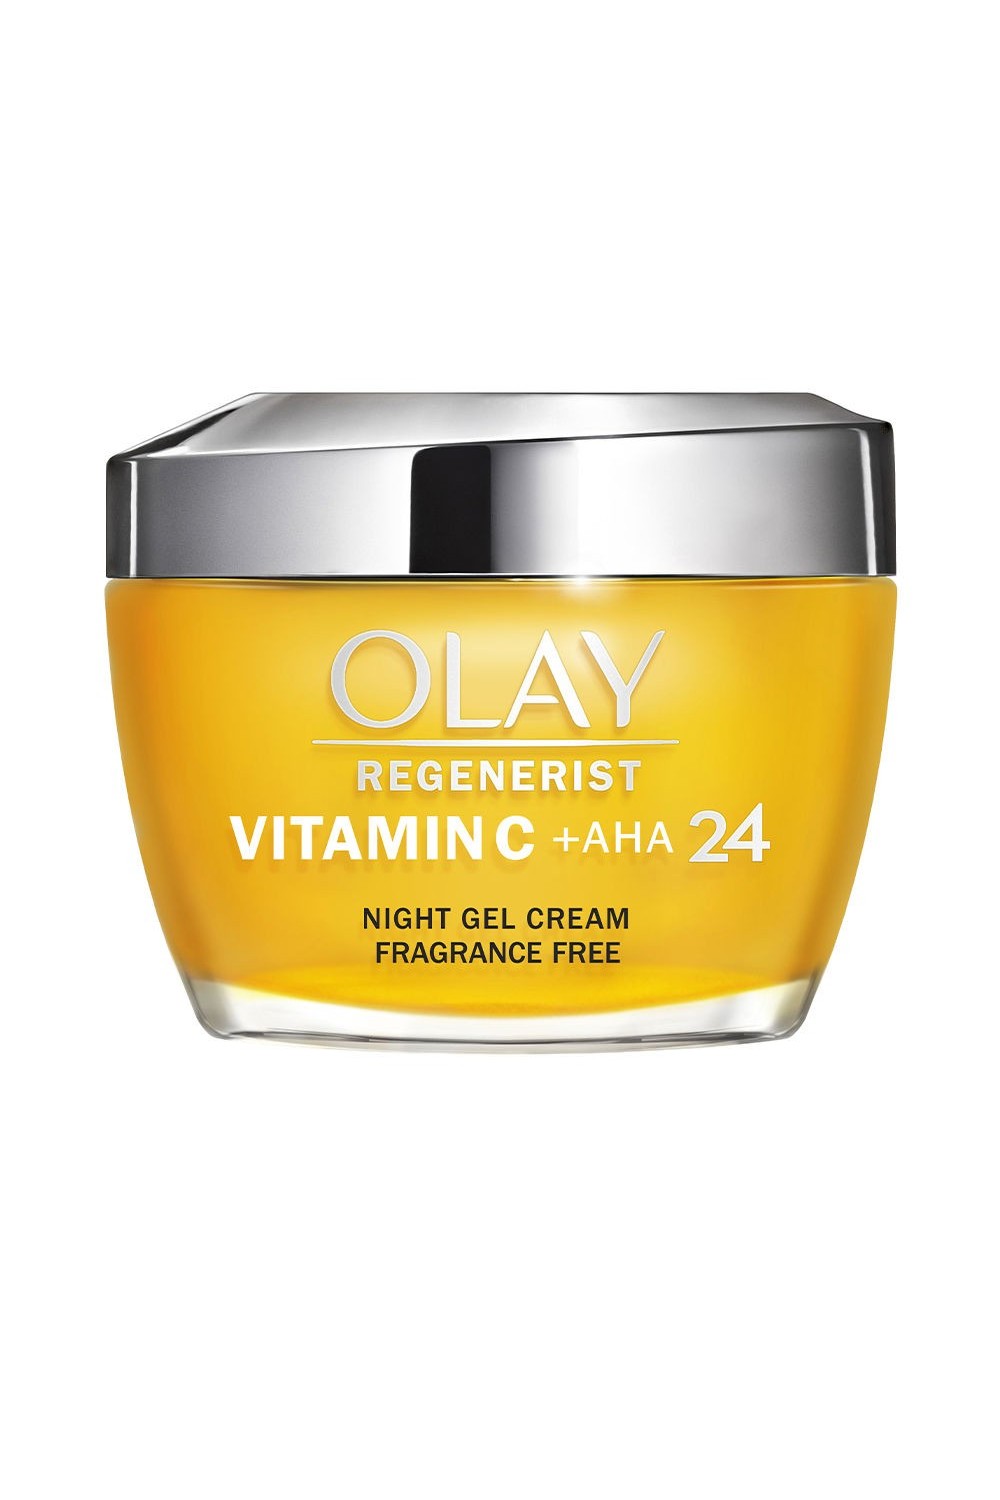 Olay Regenerist Vitamin C Aha 24 Gel Crema Noche 50ml